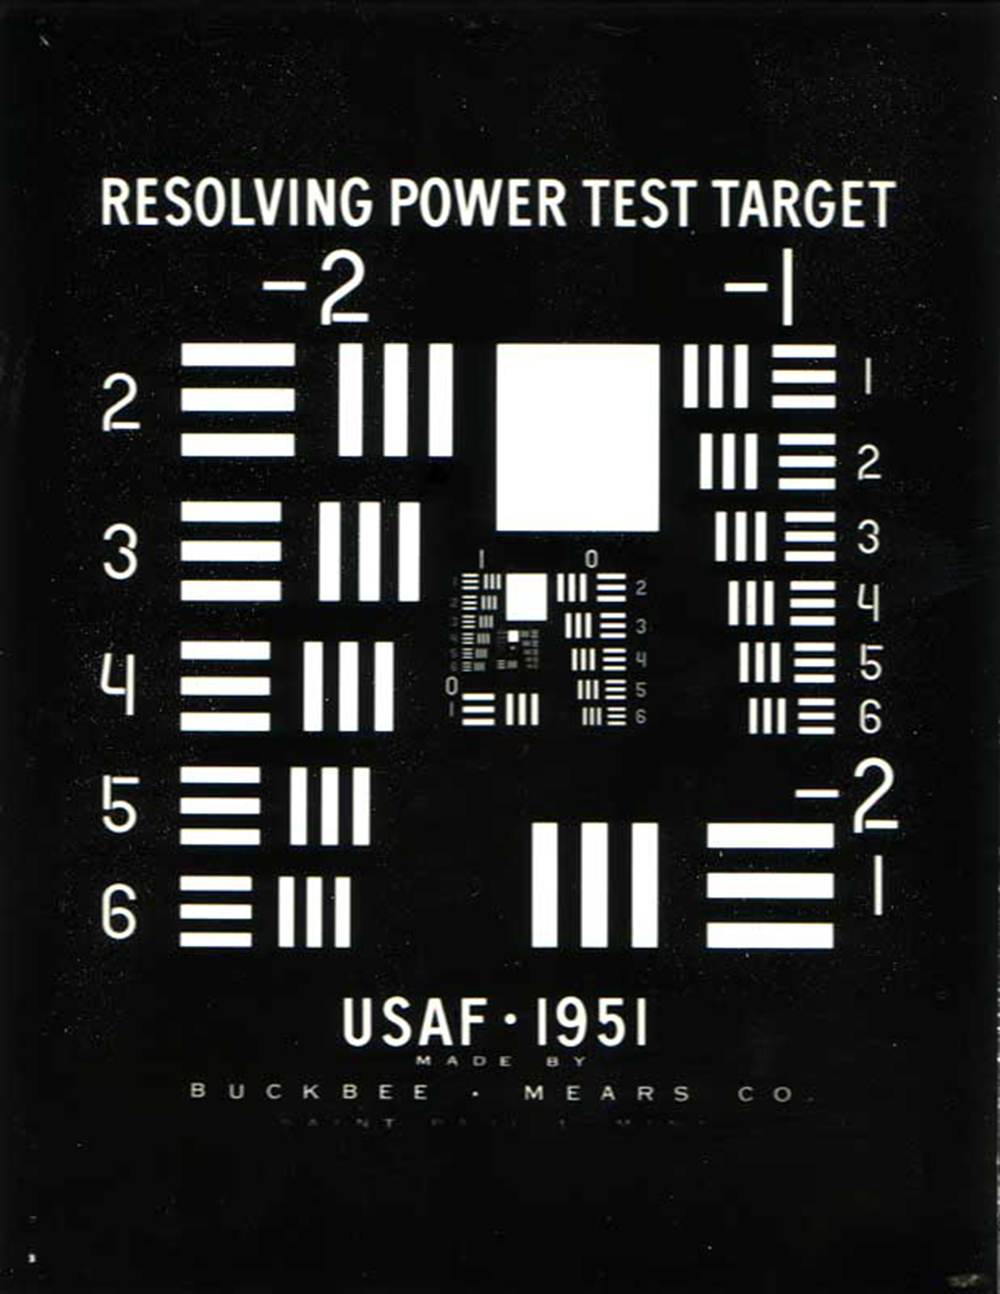 Resolving Power Test - Wikipedia